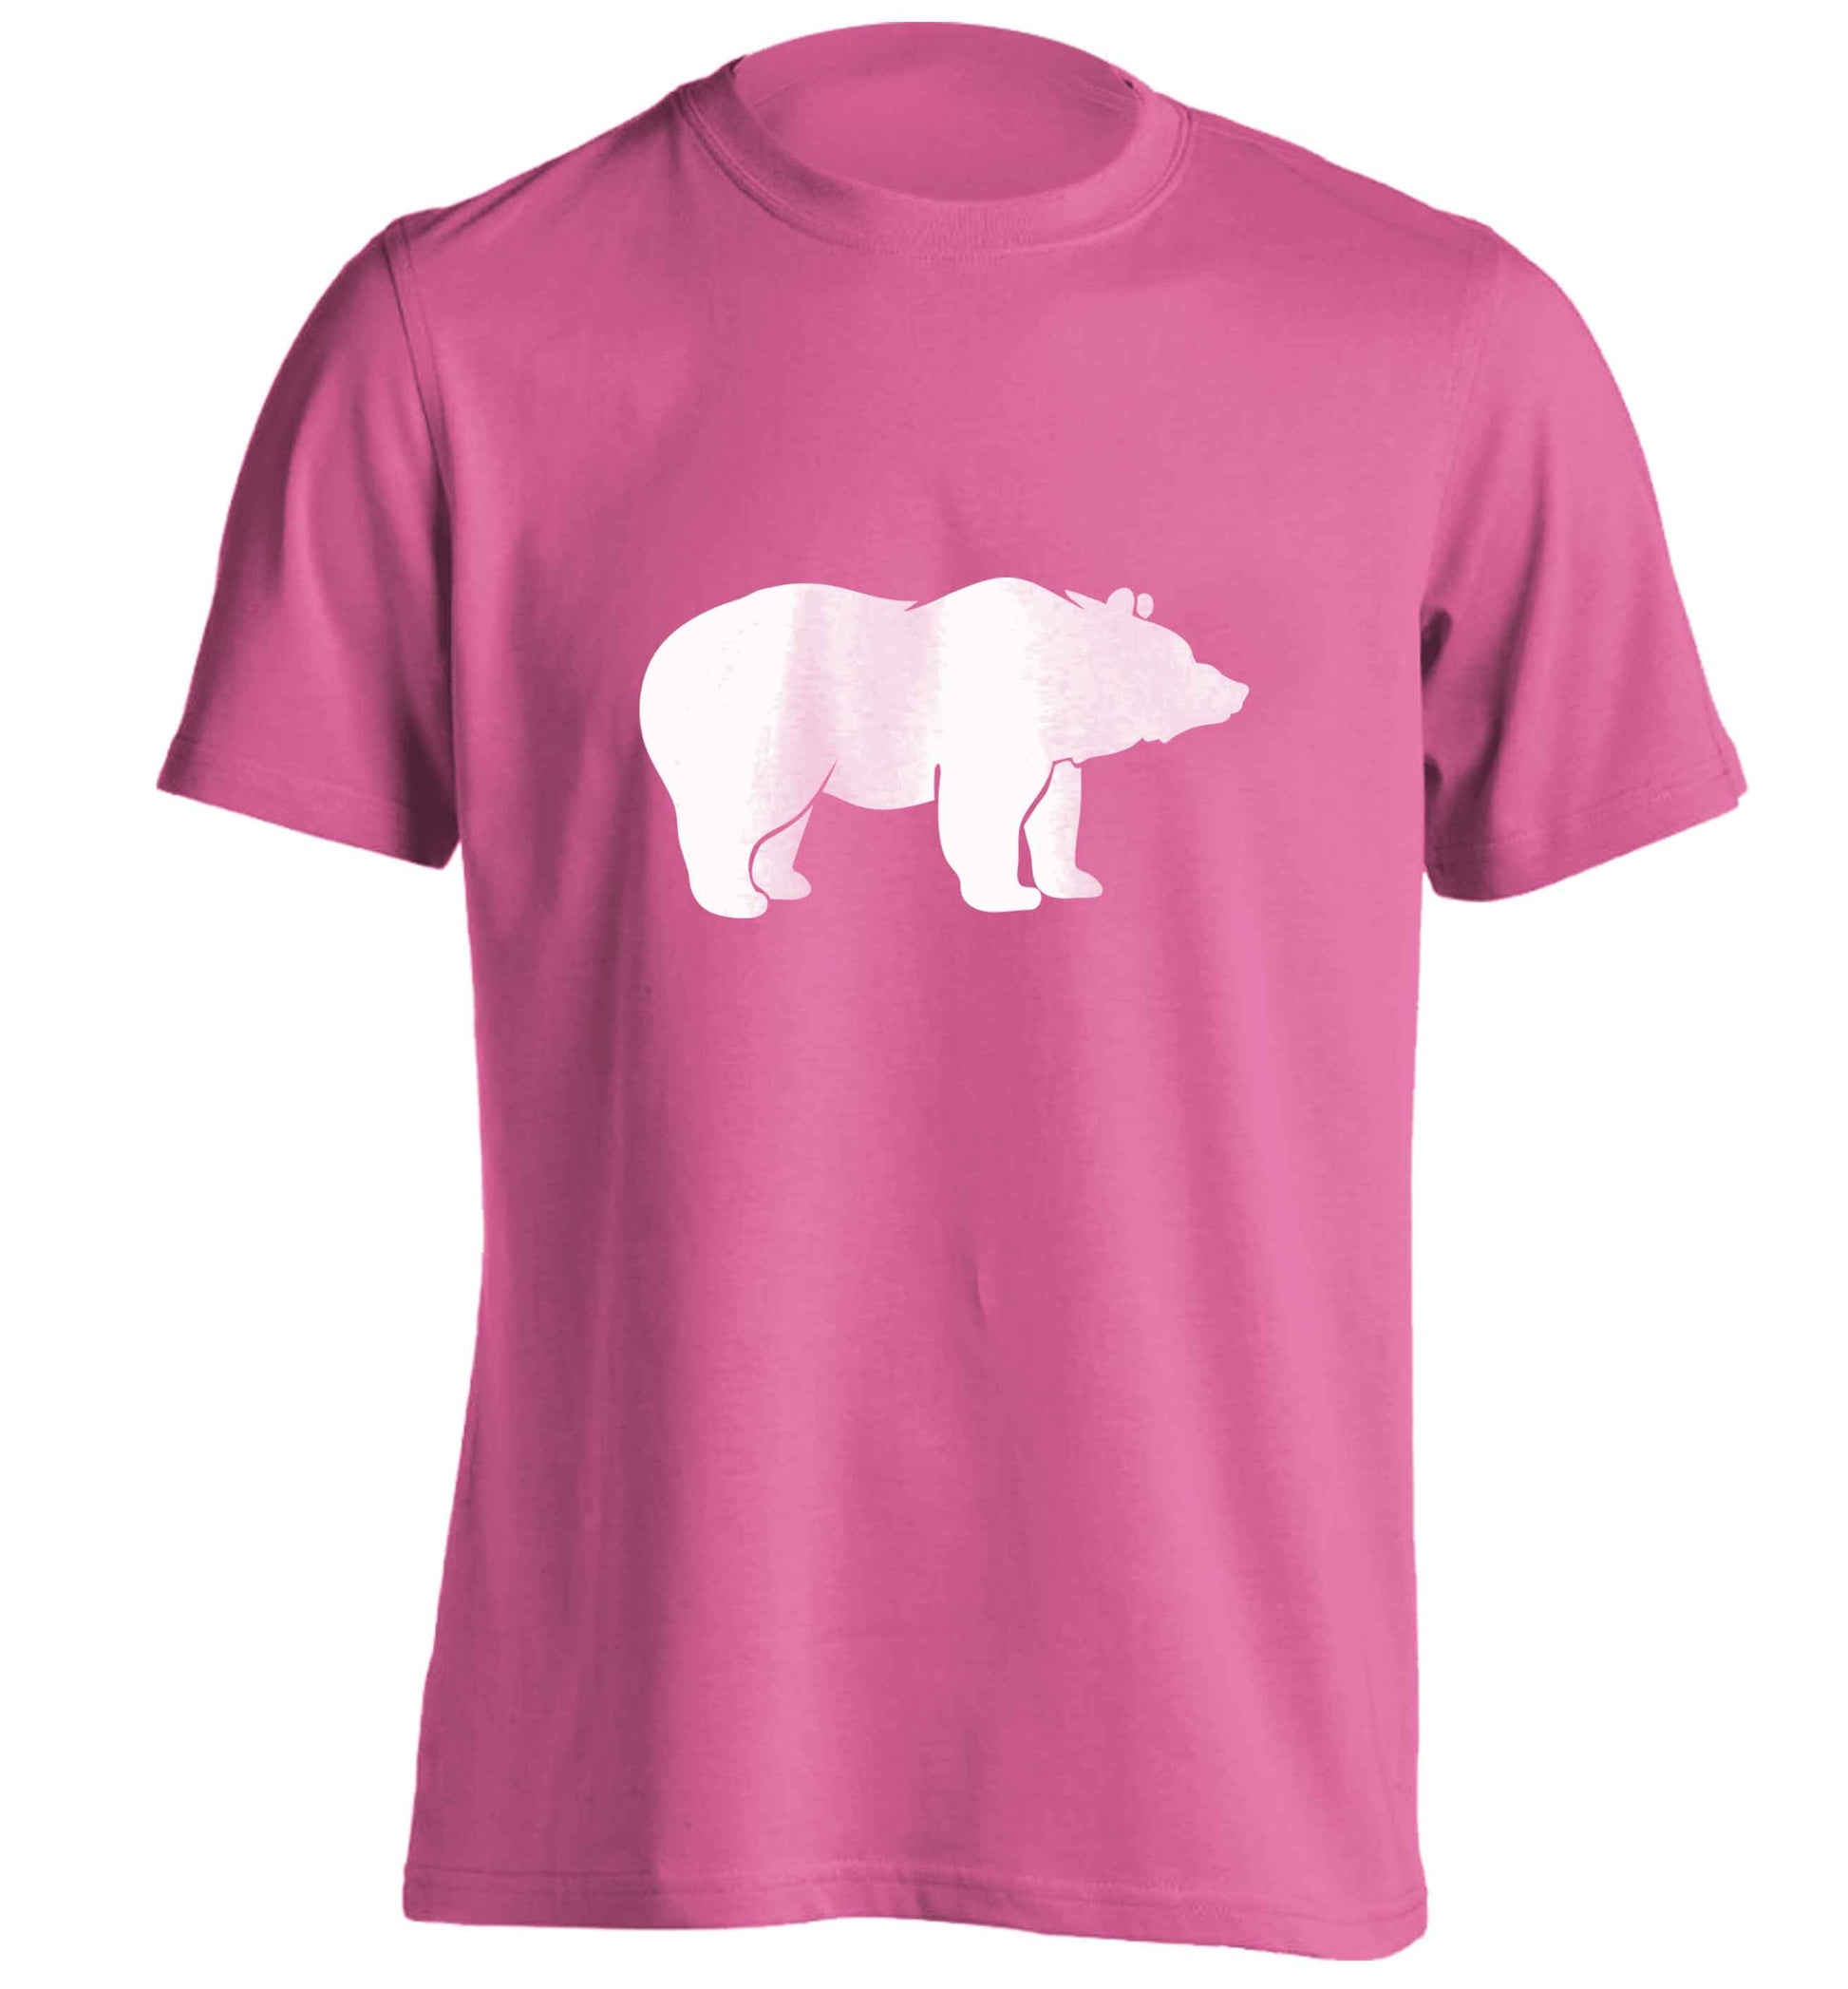 Blue bear adults unisex pink Tshirt 2XL